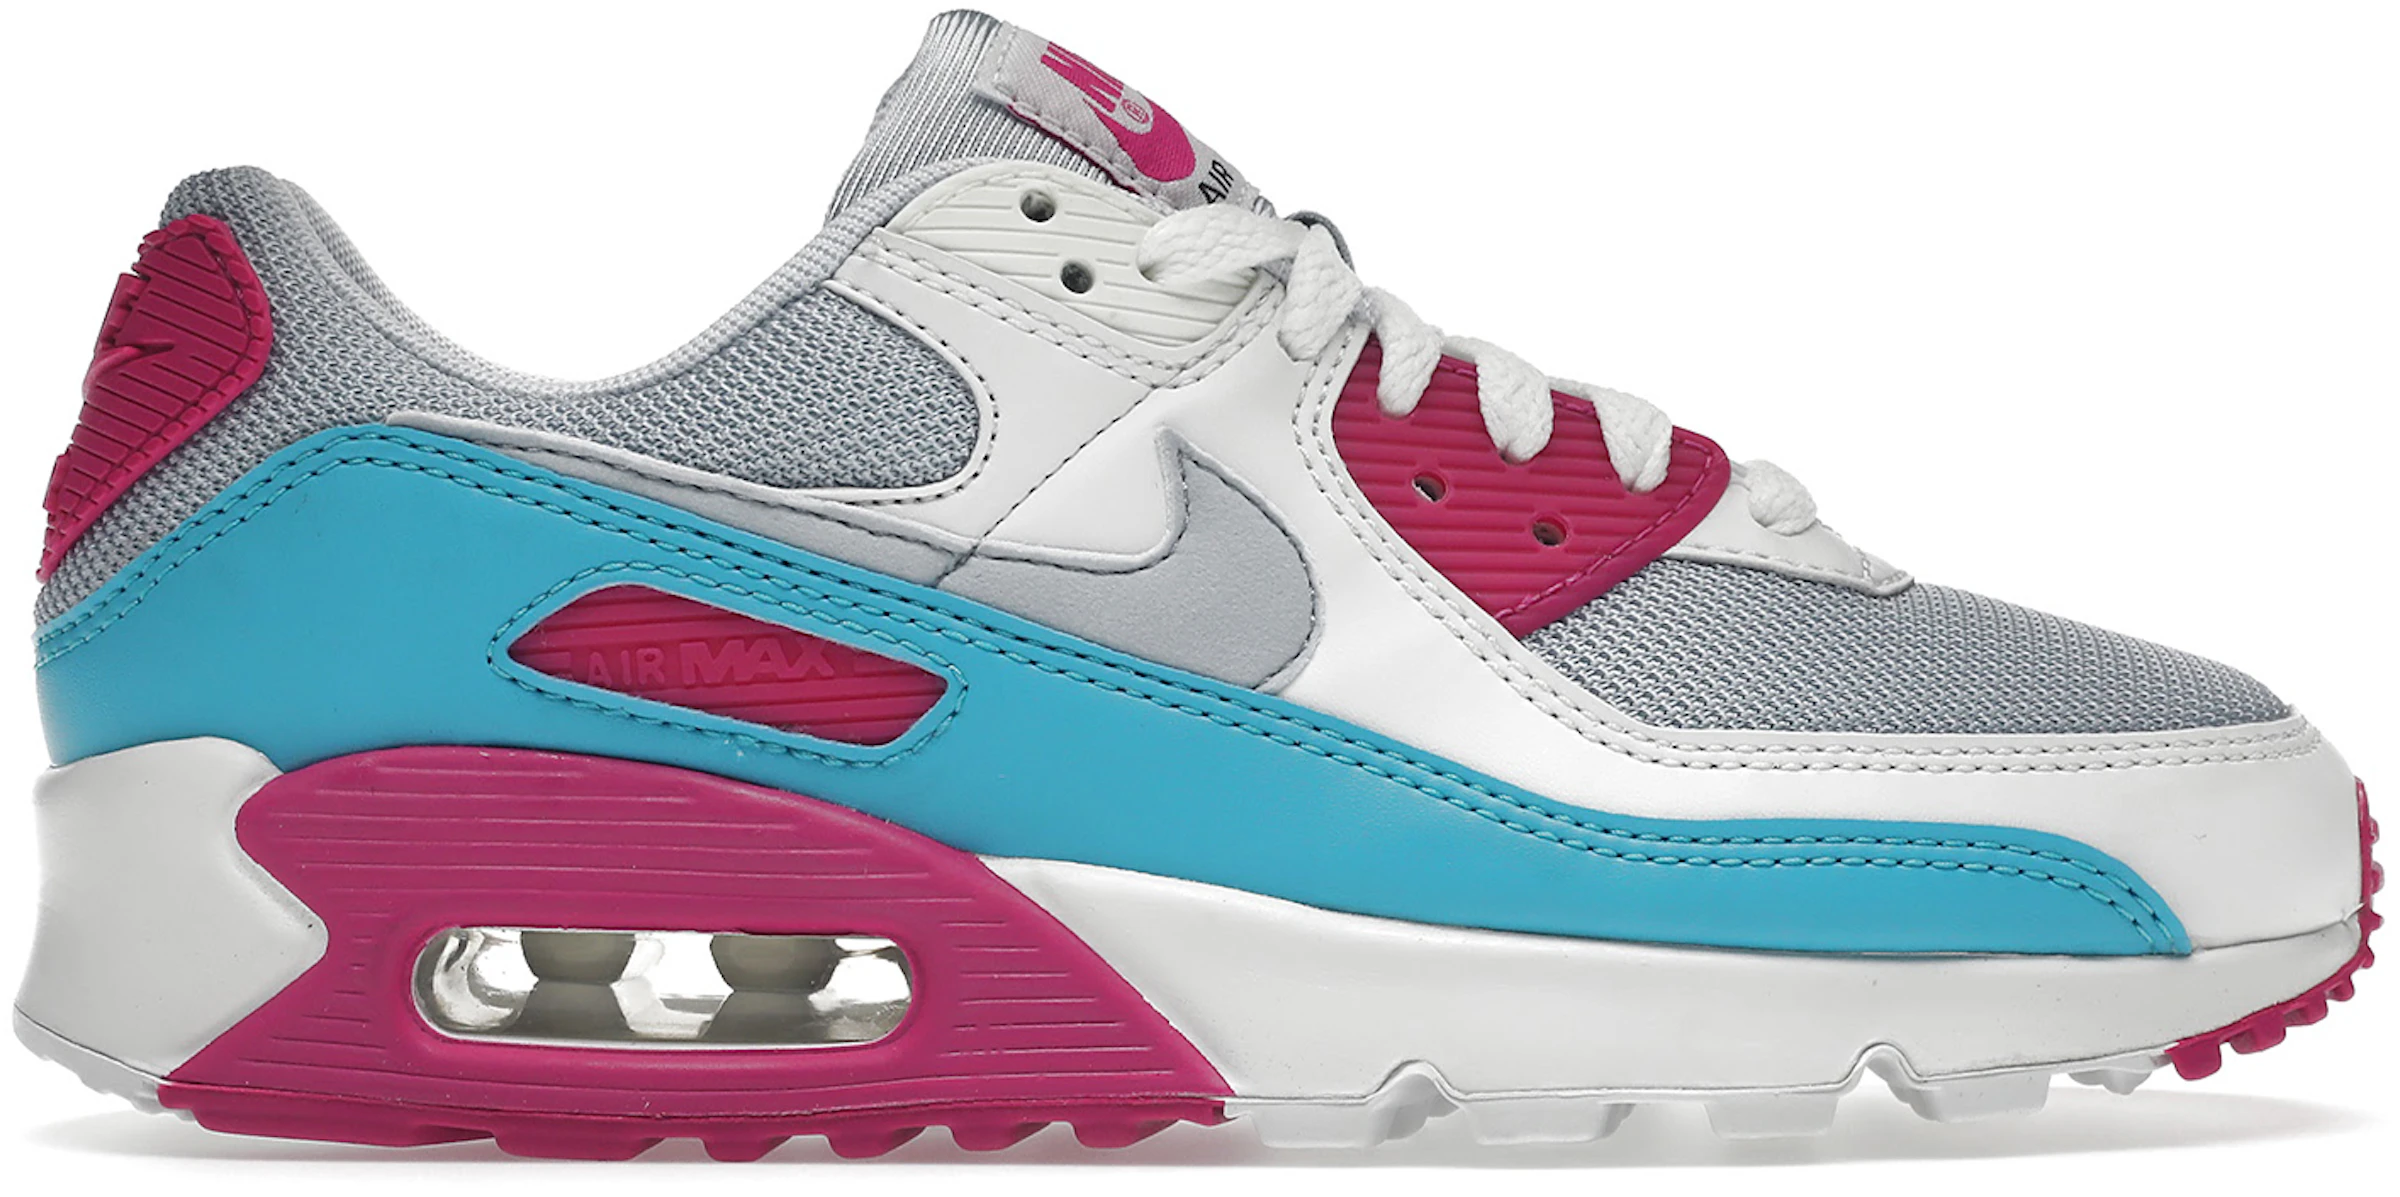 in de rij gaan staan Verleden Aktentas Nike Air Max 90 White Vivid Pink Light Blue Fury (Women's) - CT1030-001 - US